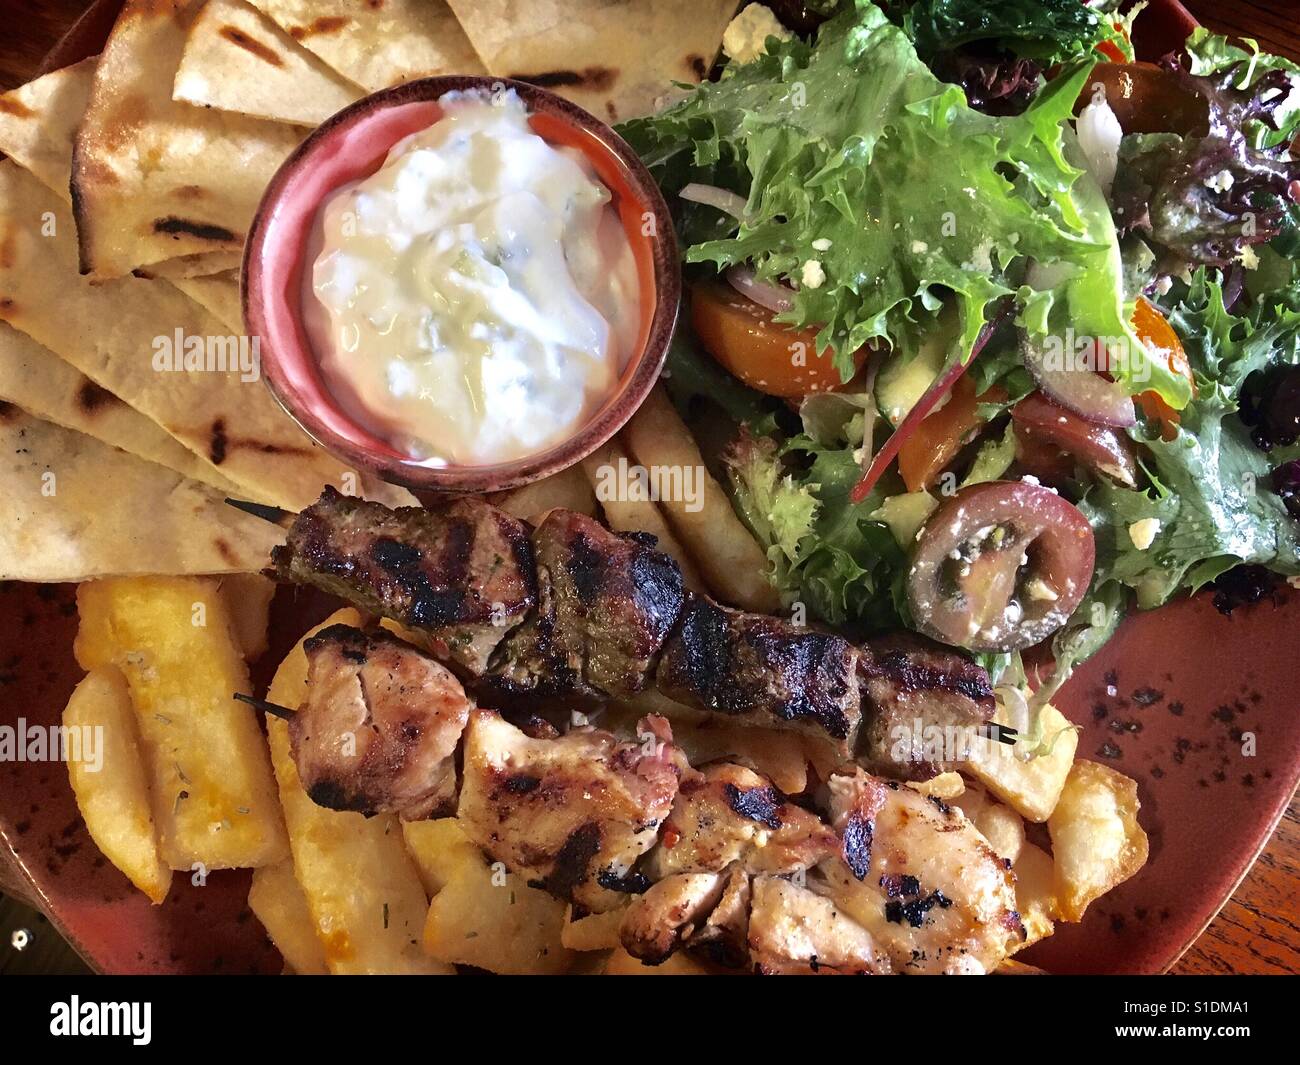 Souvlaki, peta, salad, hot chips & sauce' Stock Photo